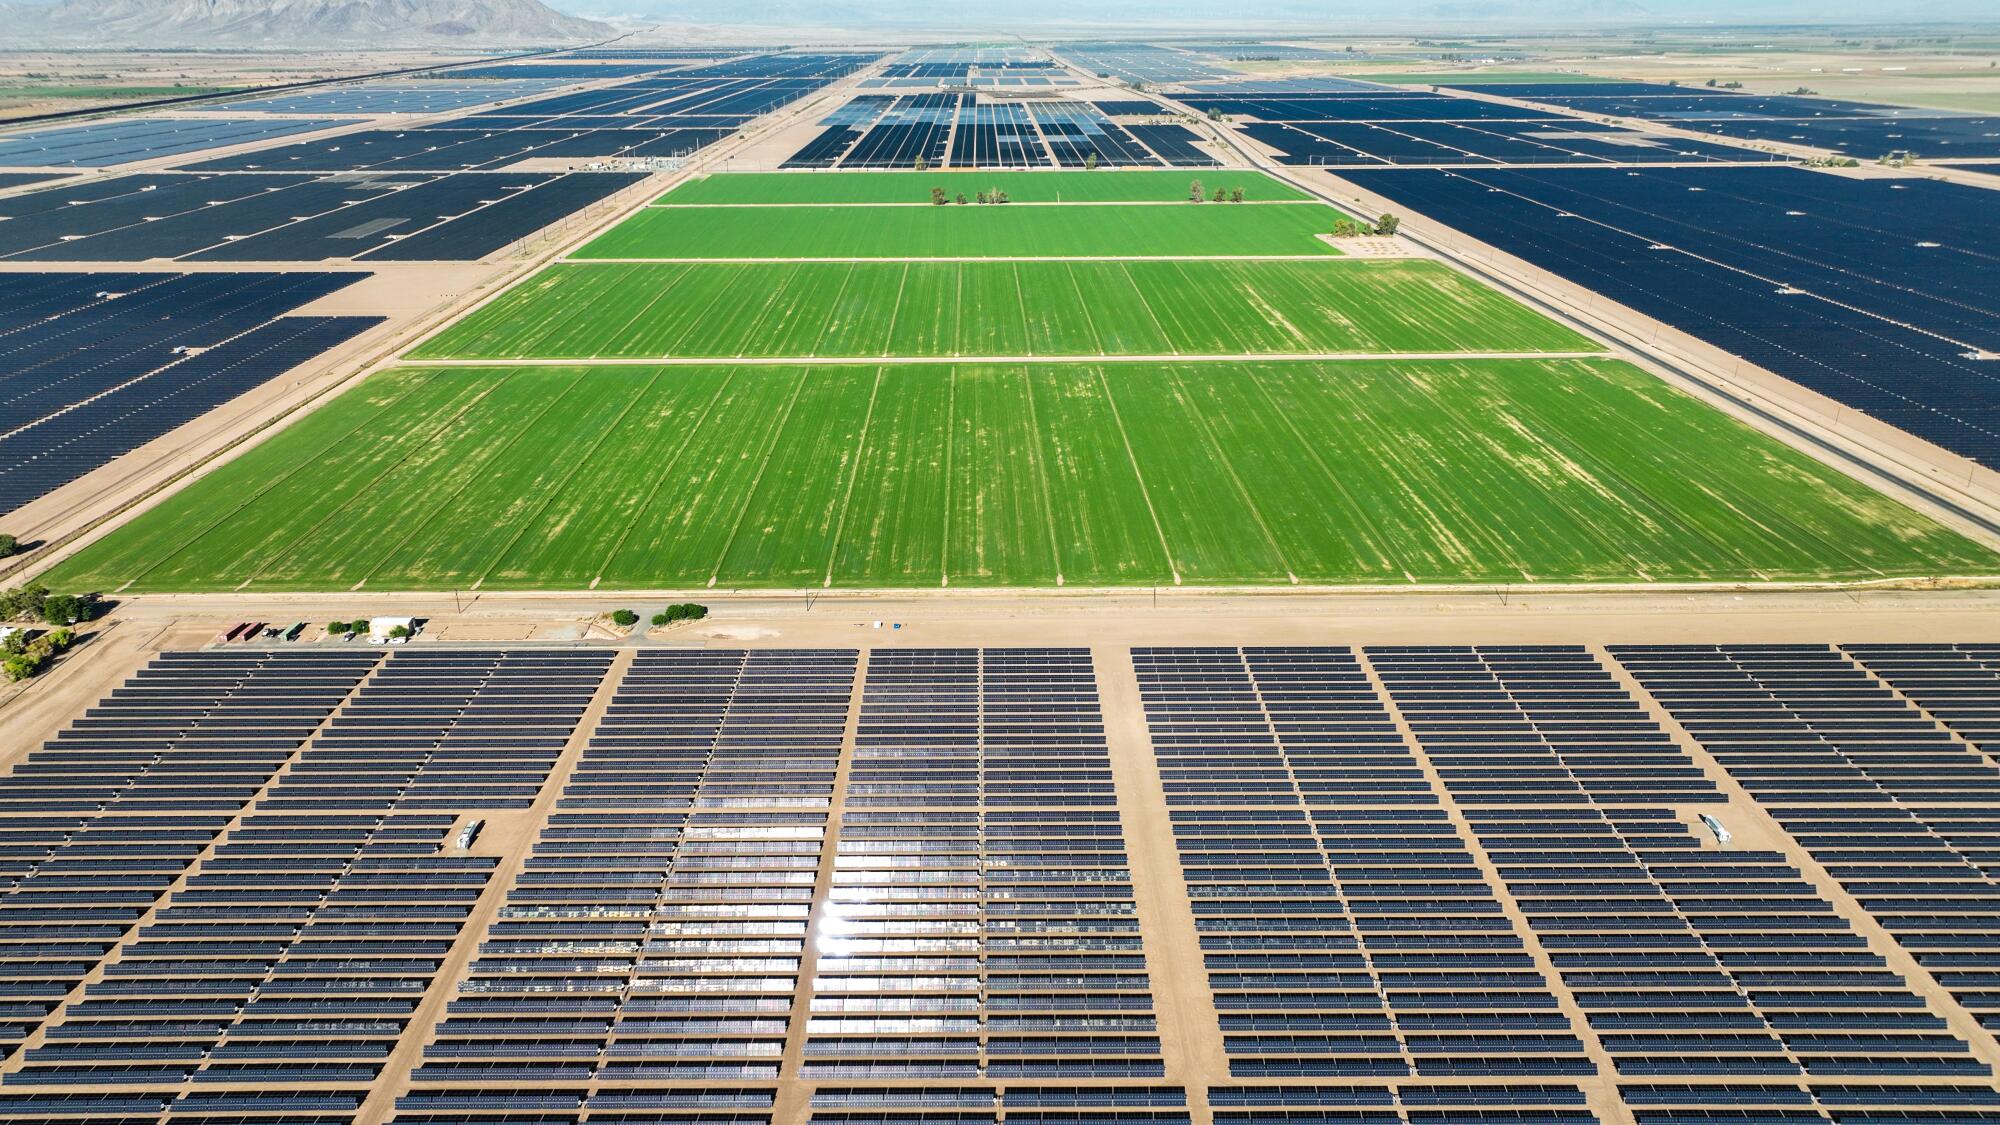 Solar projects surround one of Trevor Tagg's farm fields near the U.S.-Mexico border.